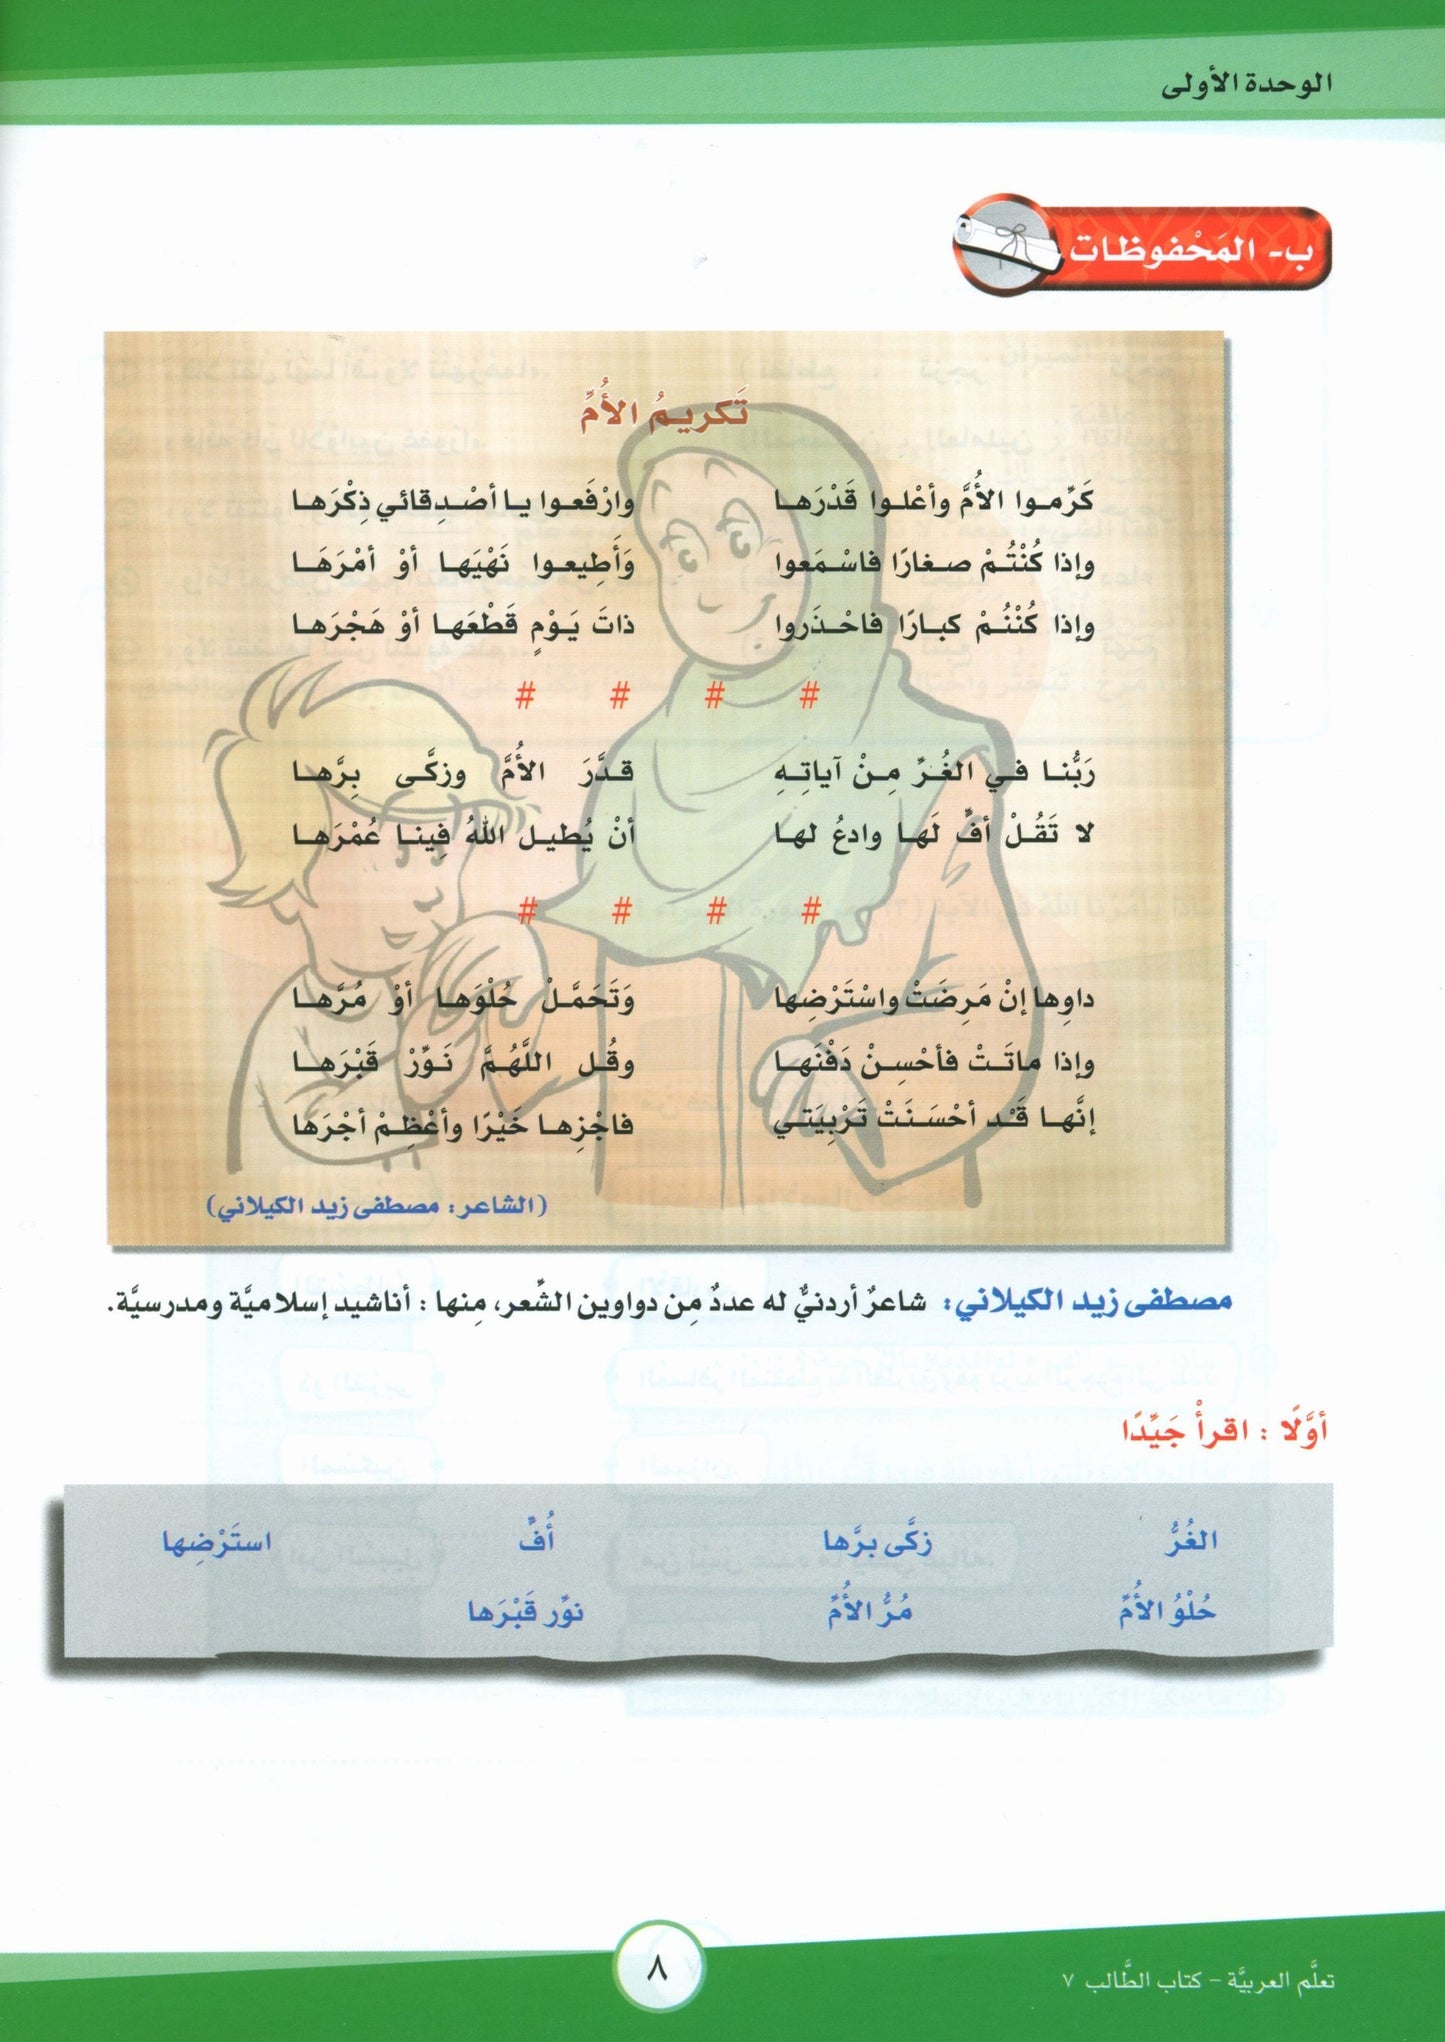 ICO Learn Arabic - Textbook - Level 7 Part 1 - تعلم العربية